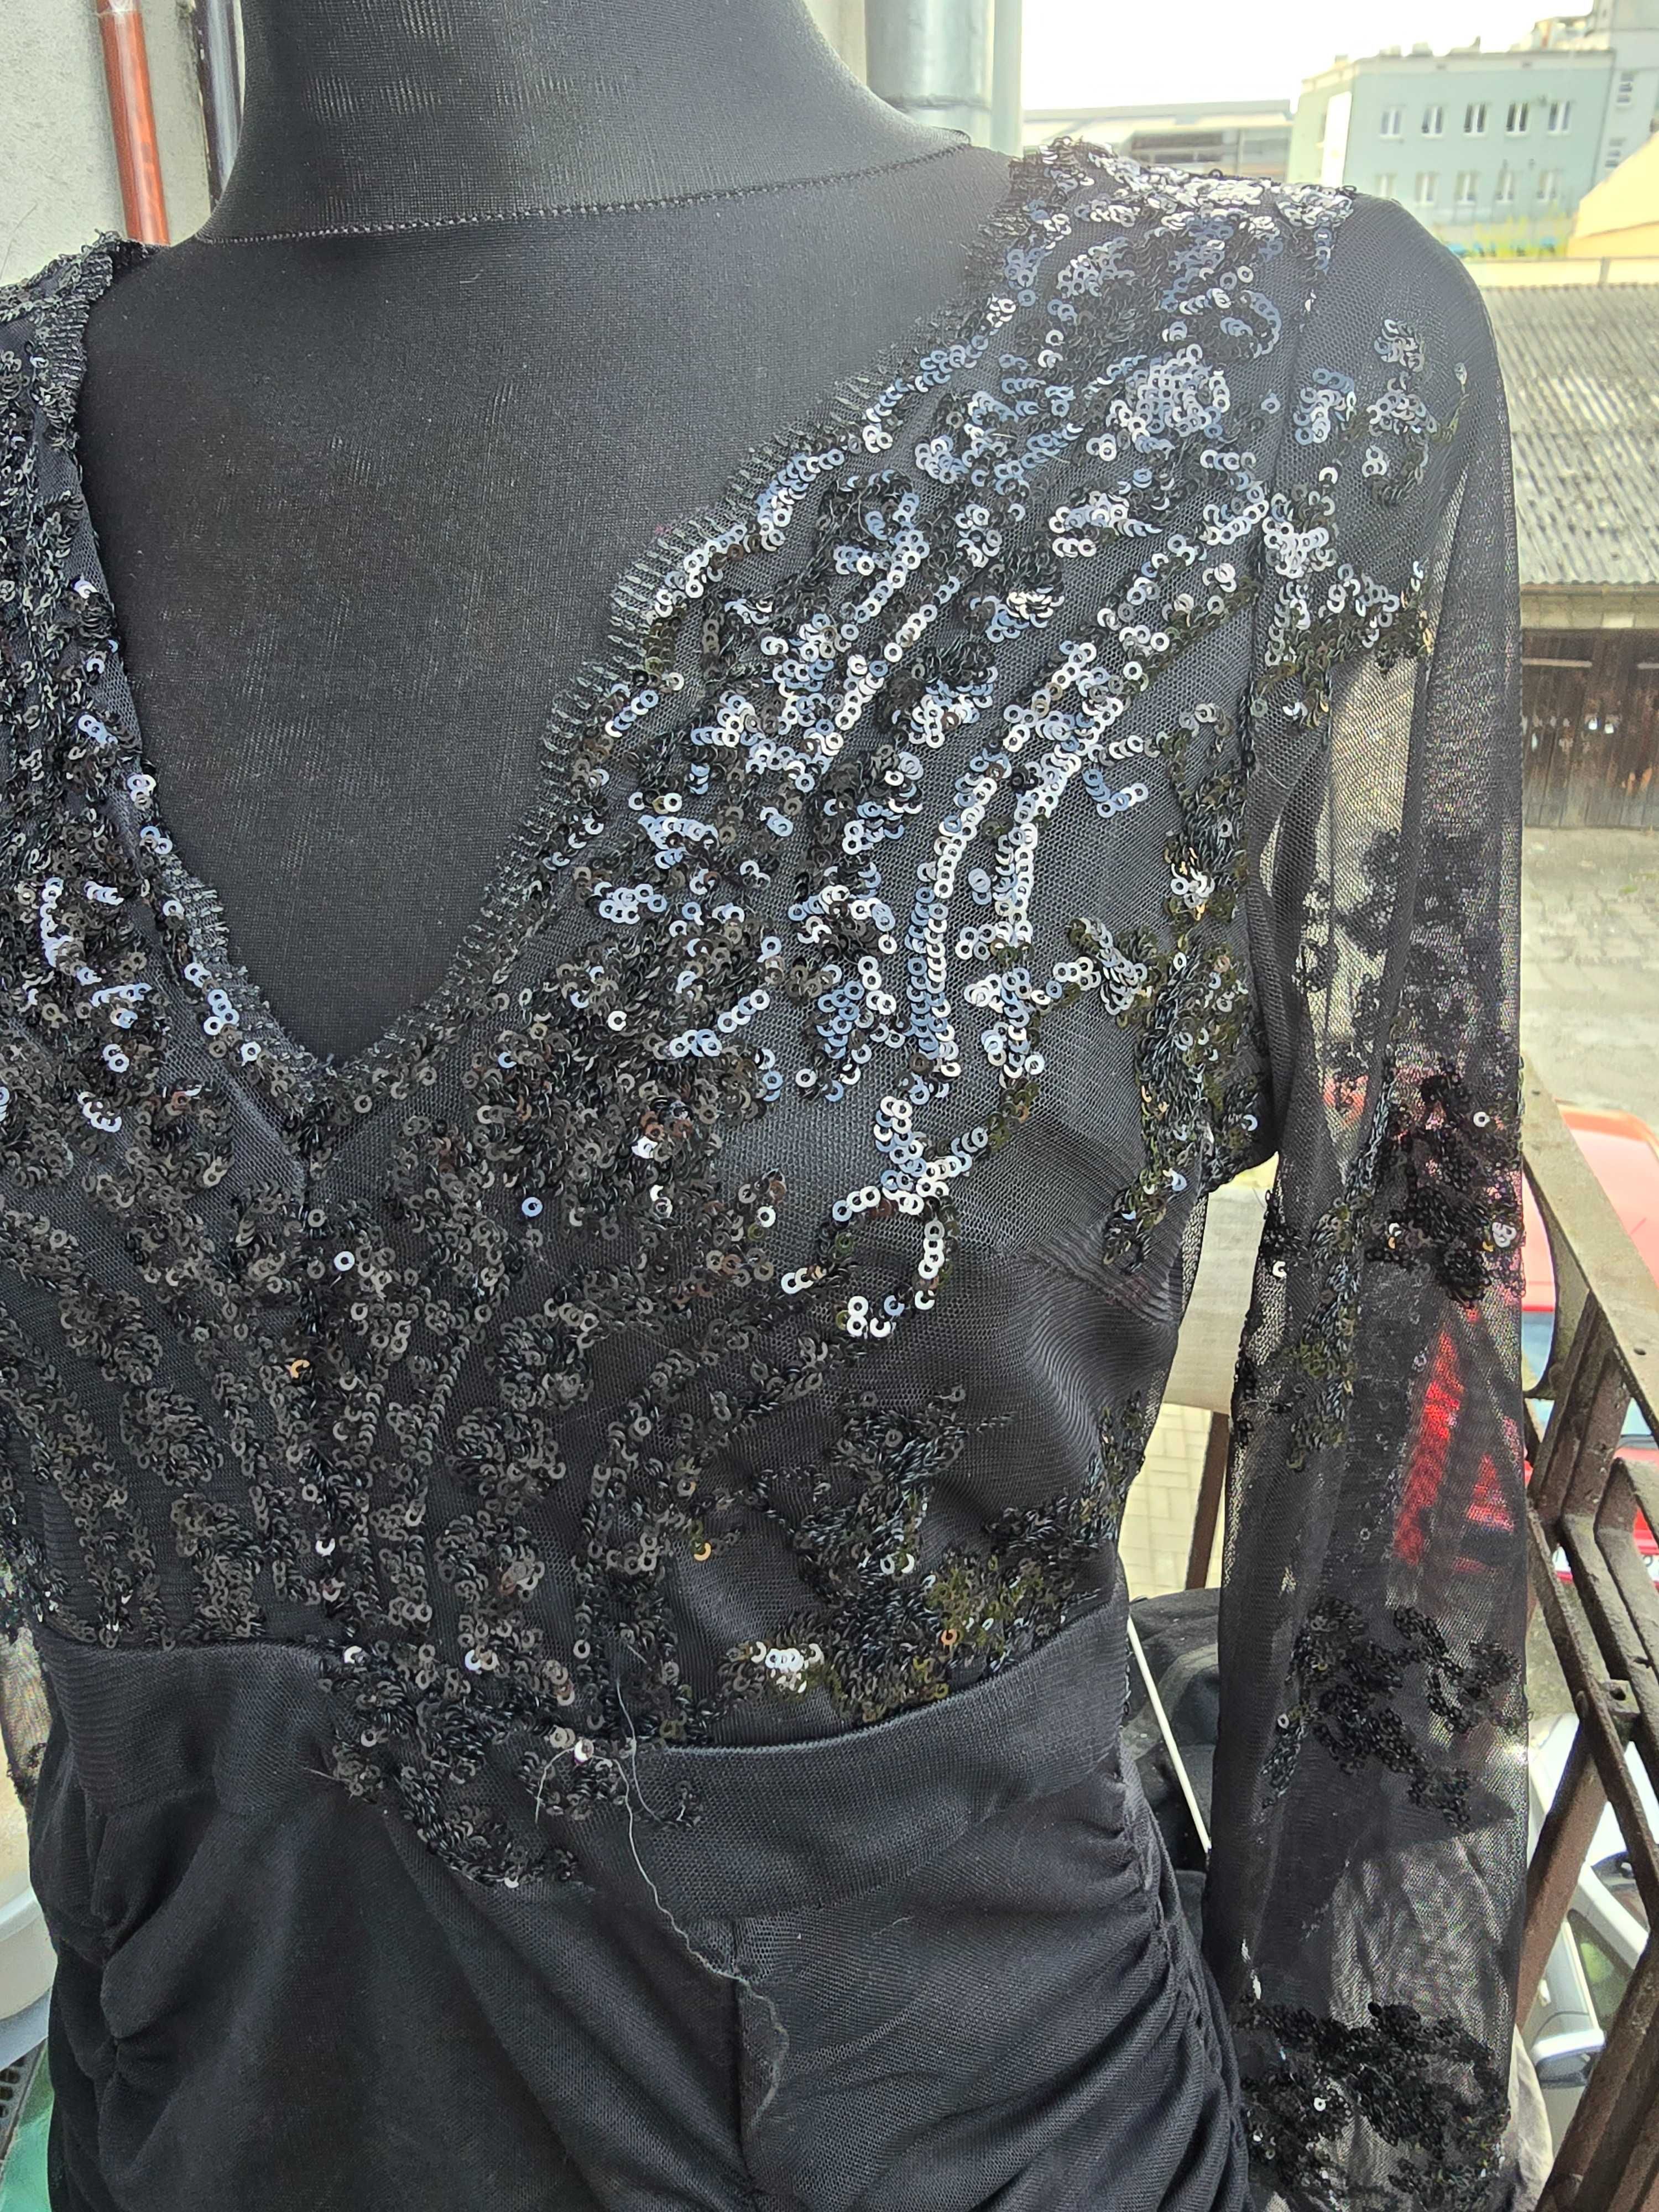 Damska sukienka elegancka z cekinami czarna dopasowana rozmiar M